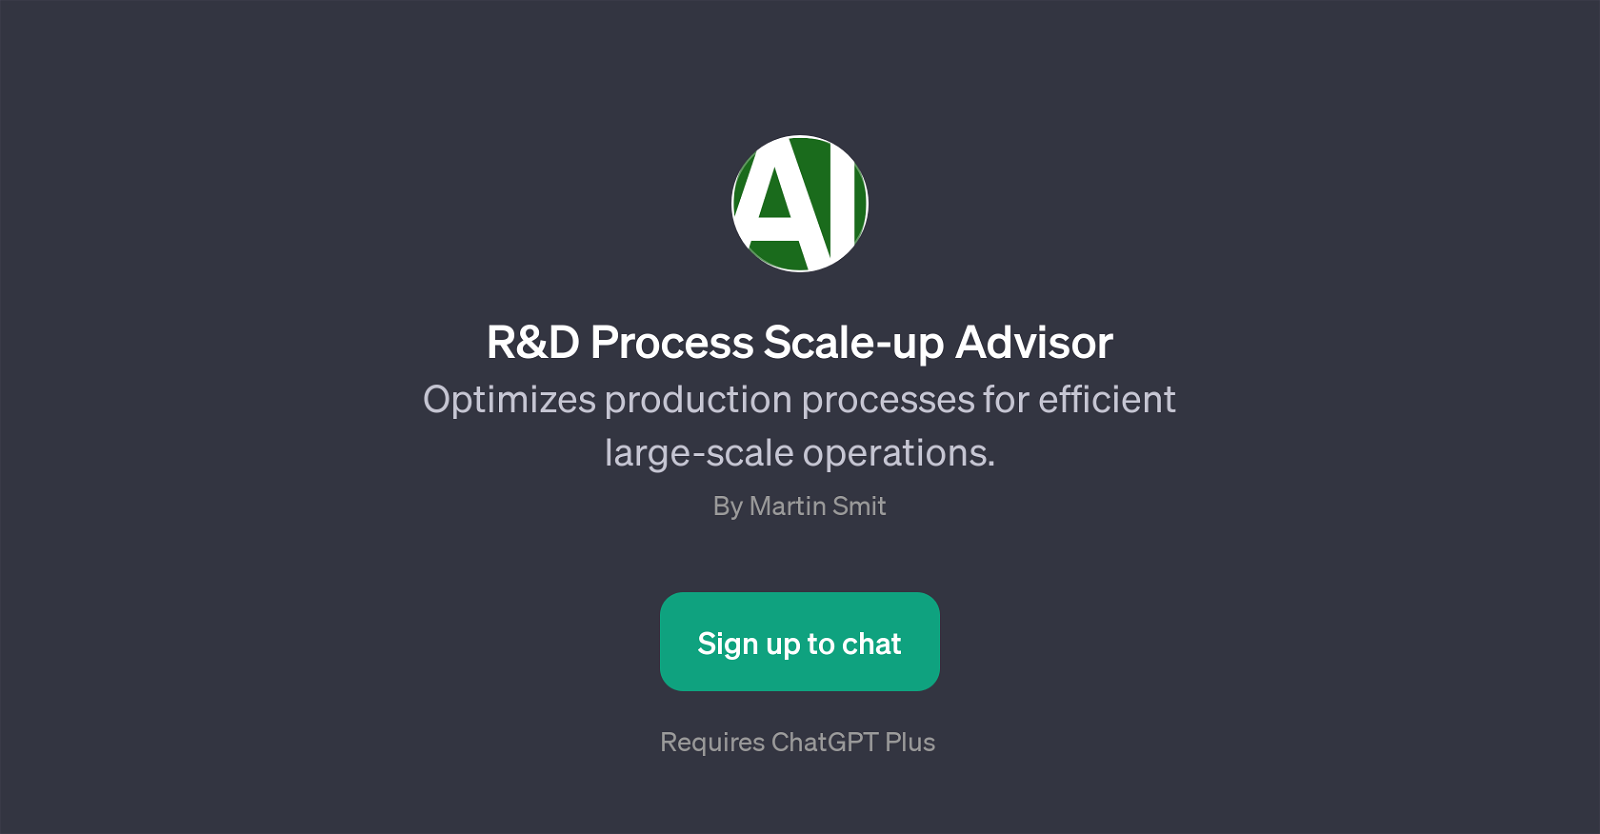 R&D Process Scale-up Advisor website